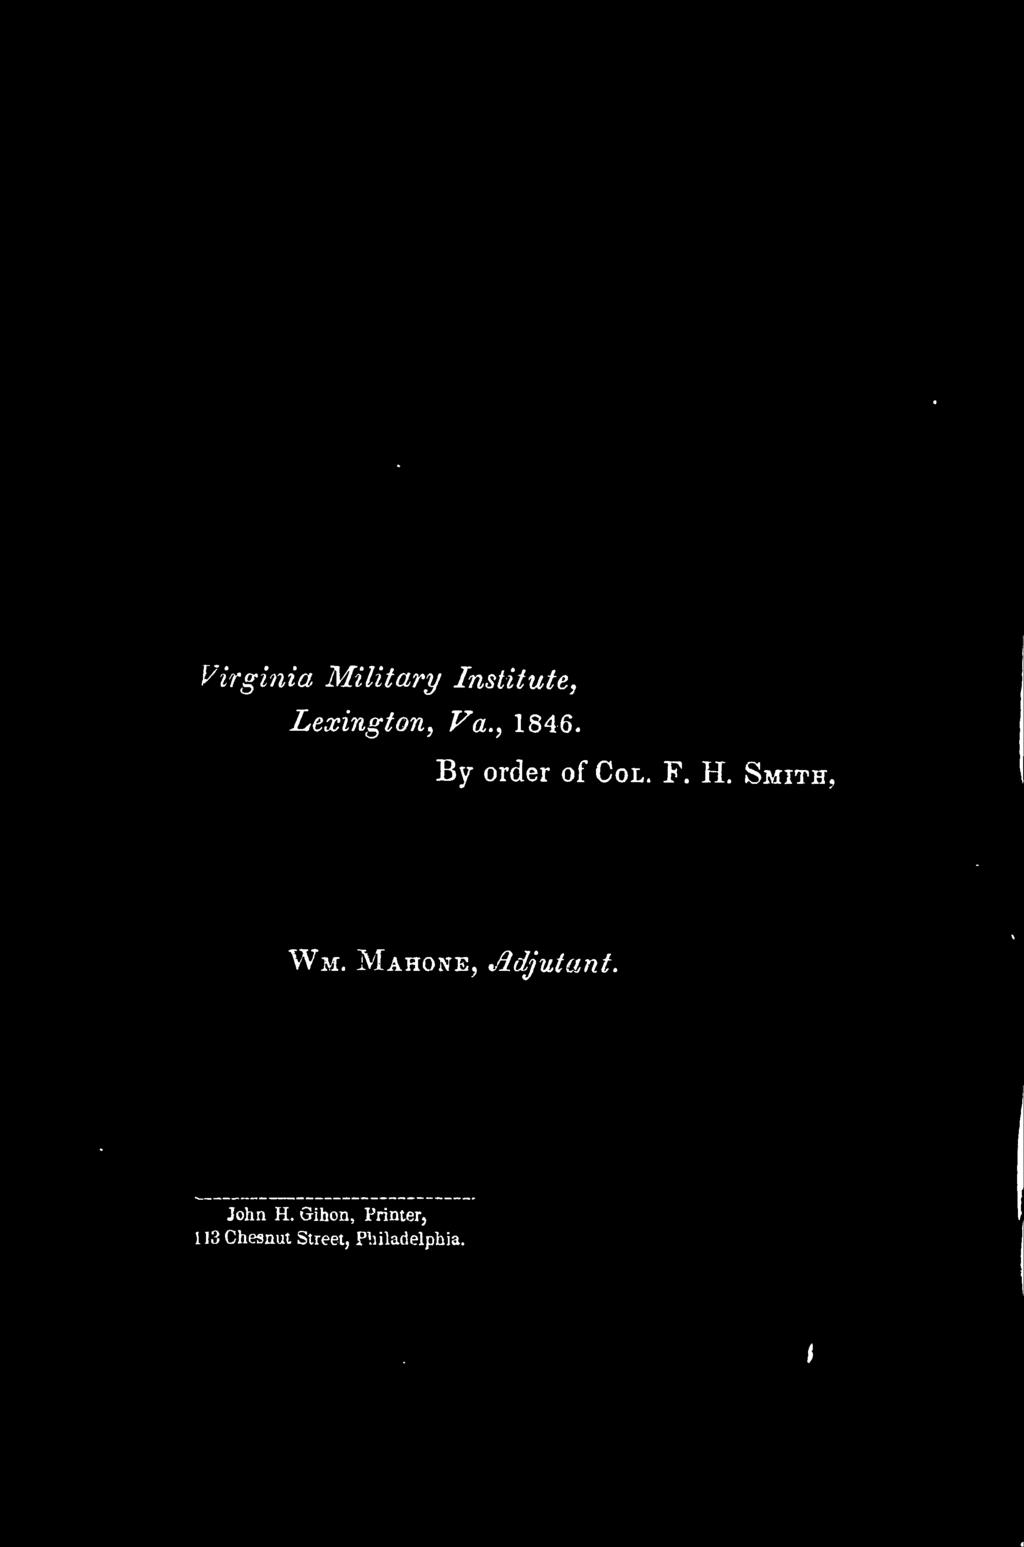 Mahone, Adjutant. John H.